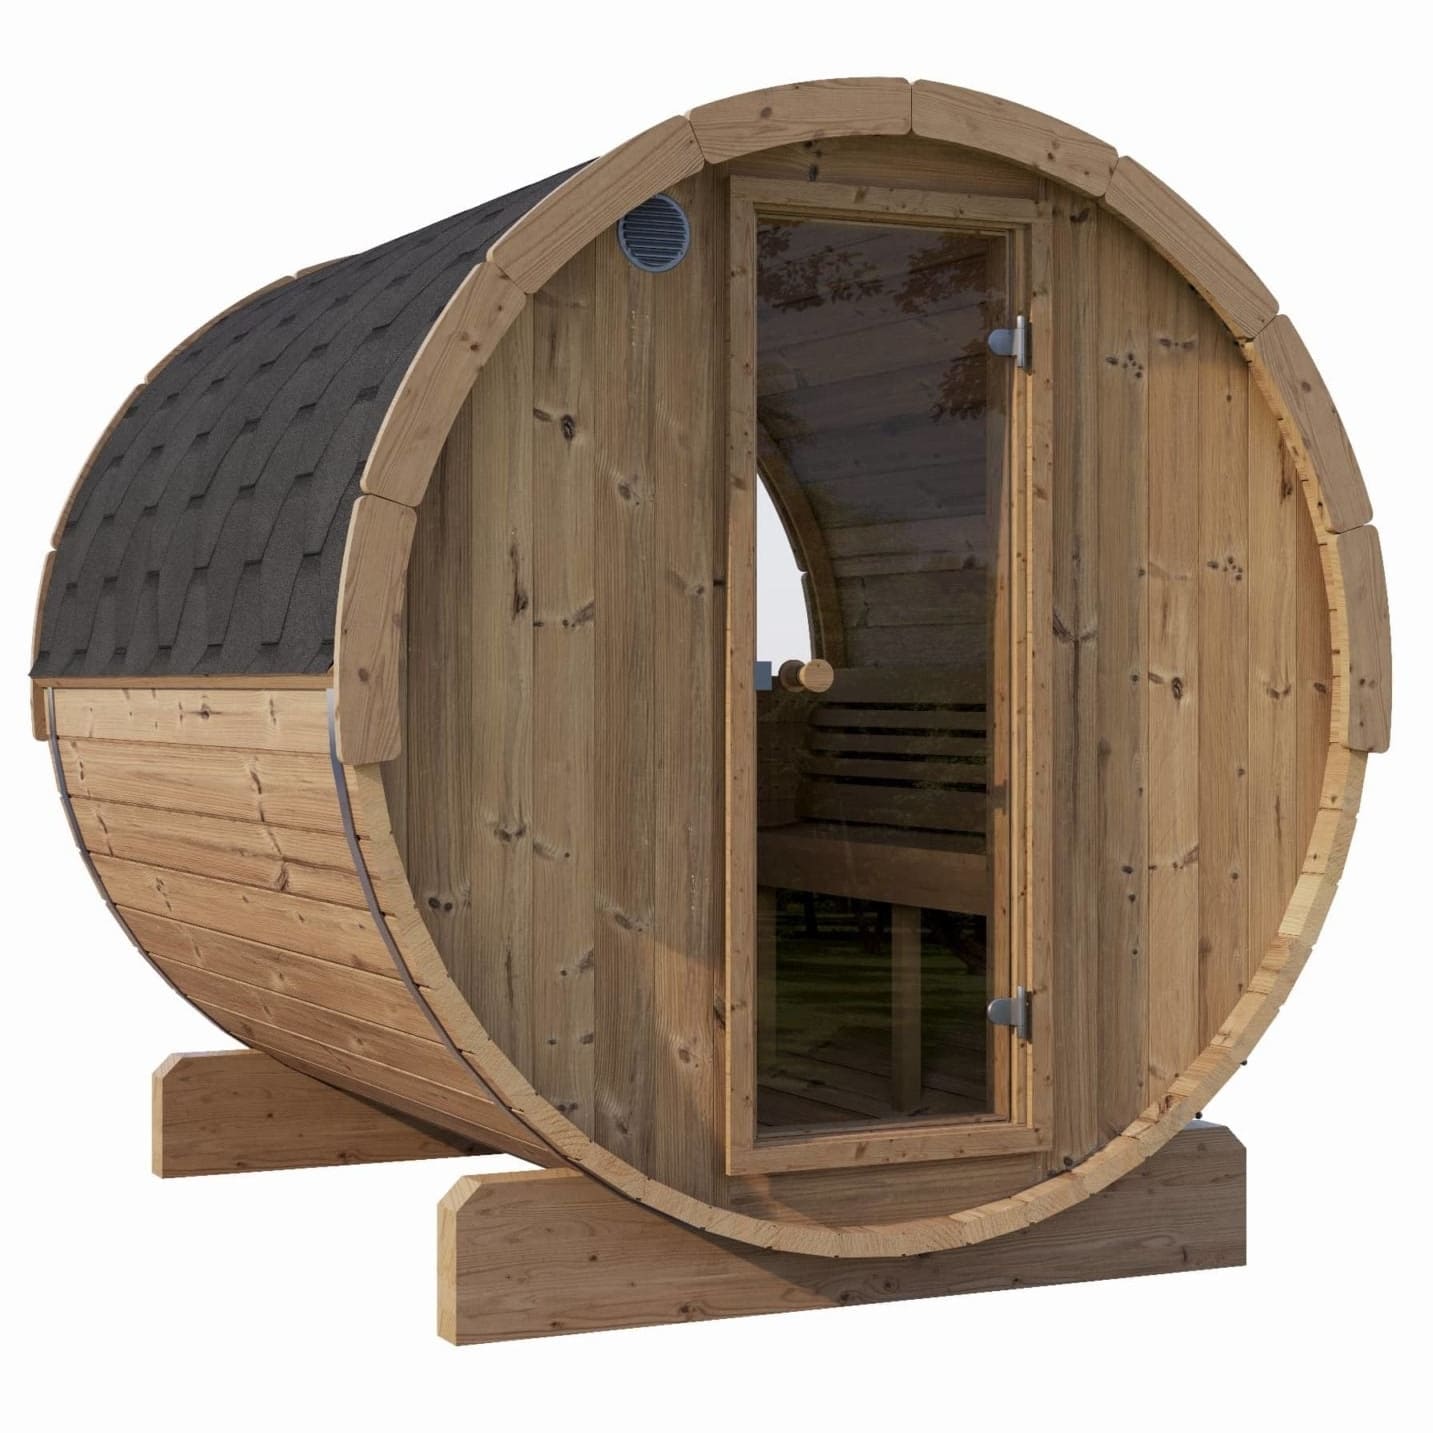 SaunaLife E7W Four Person Barrel Sauna With Window - Purely Relaxation